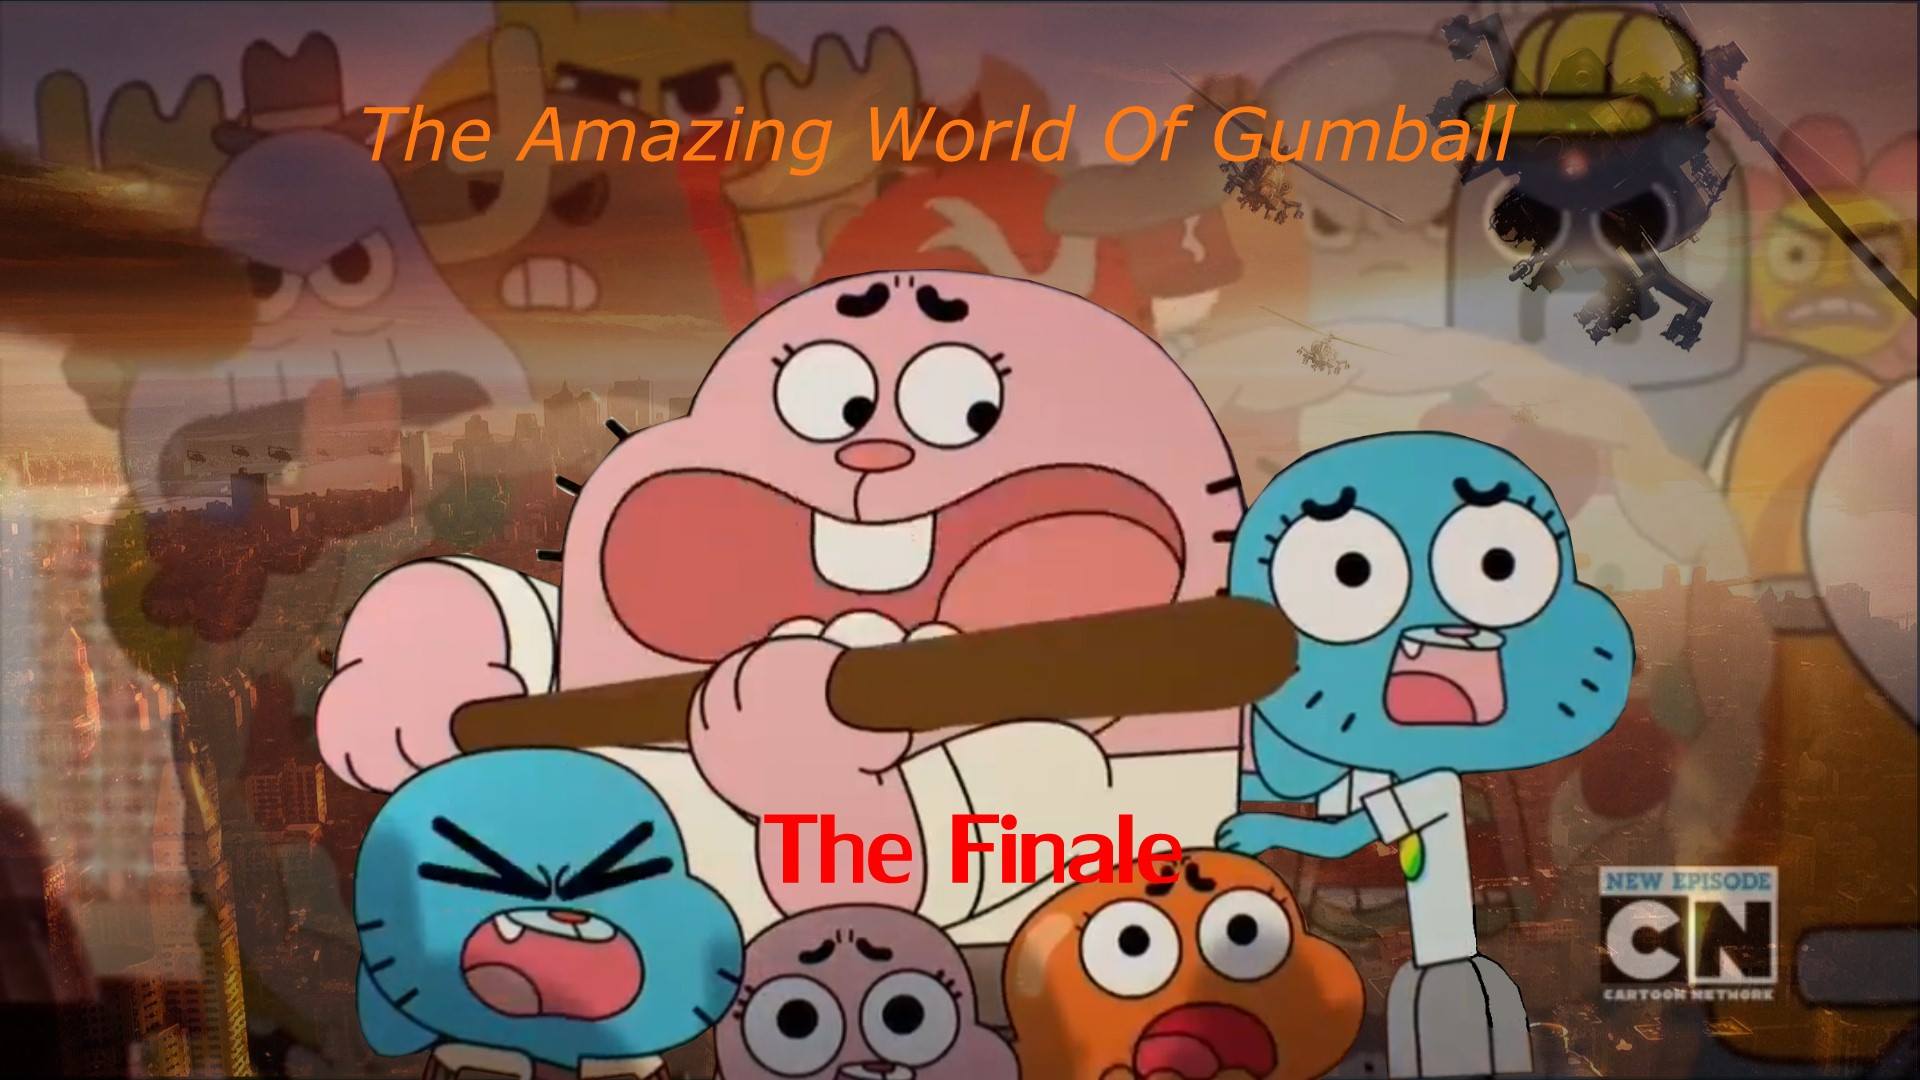 The Amazing World Of Gumball - The Final Wallpaper by edisonyeejia on